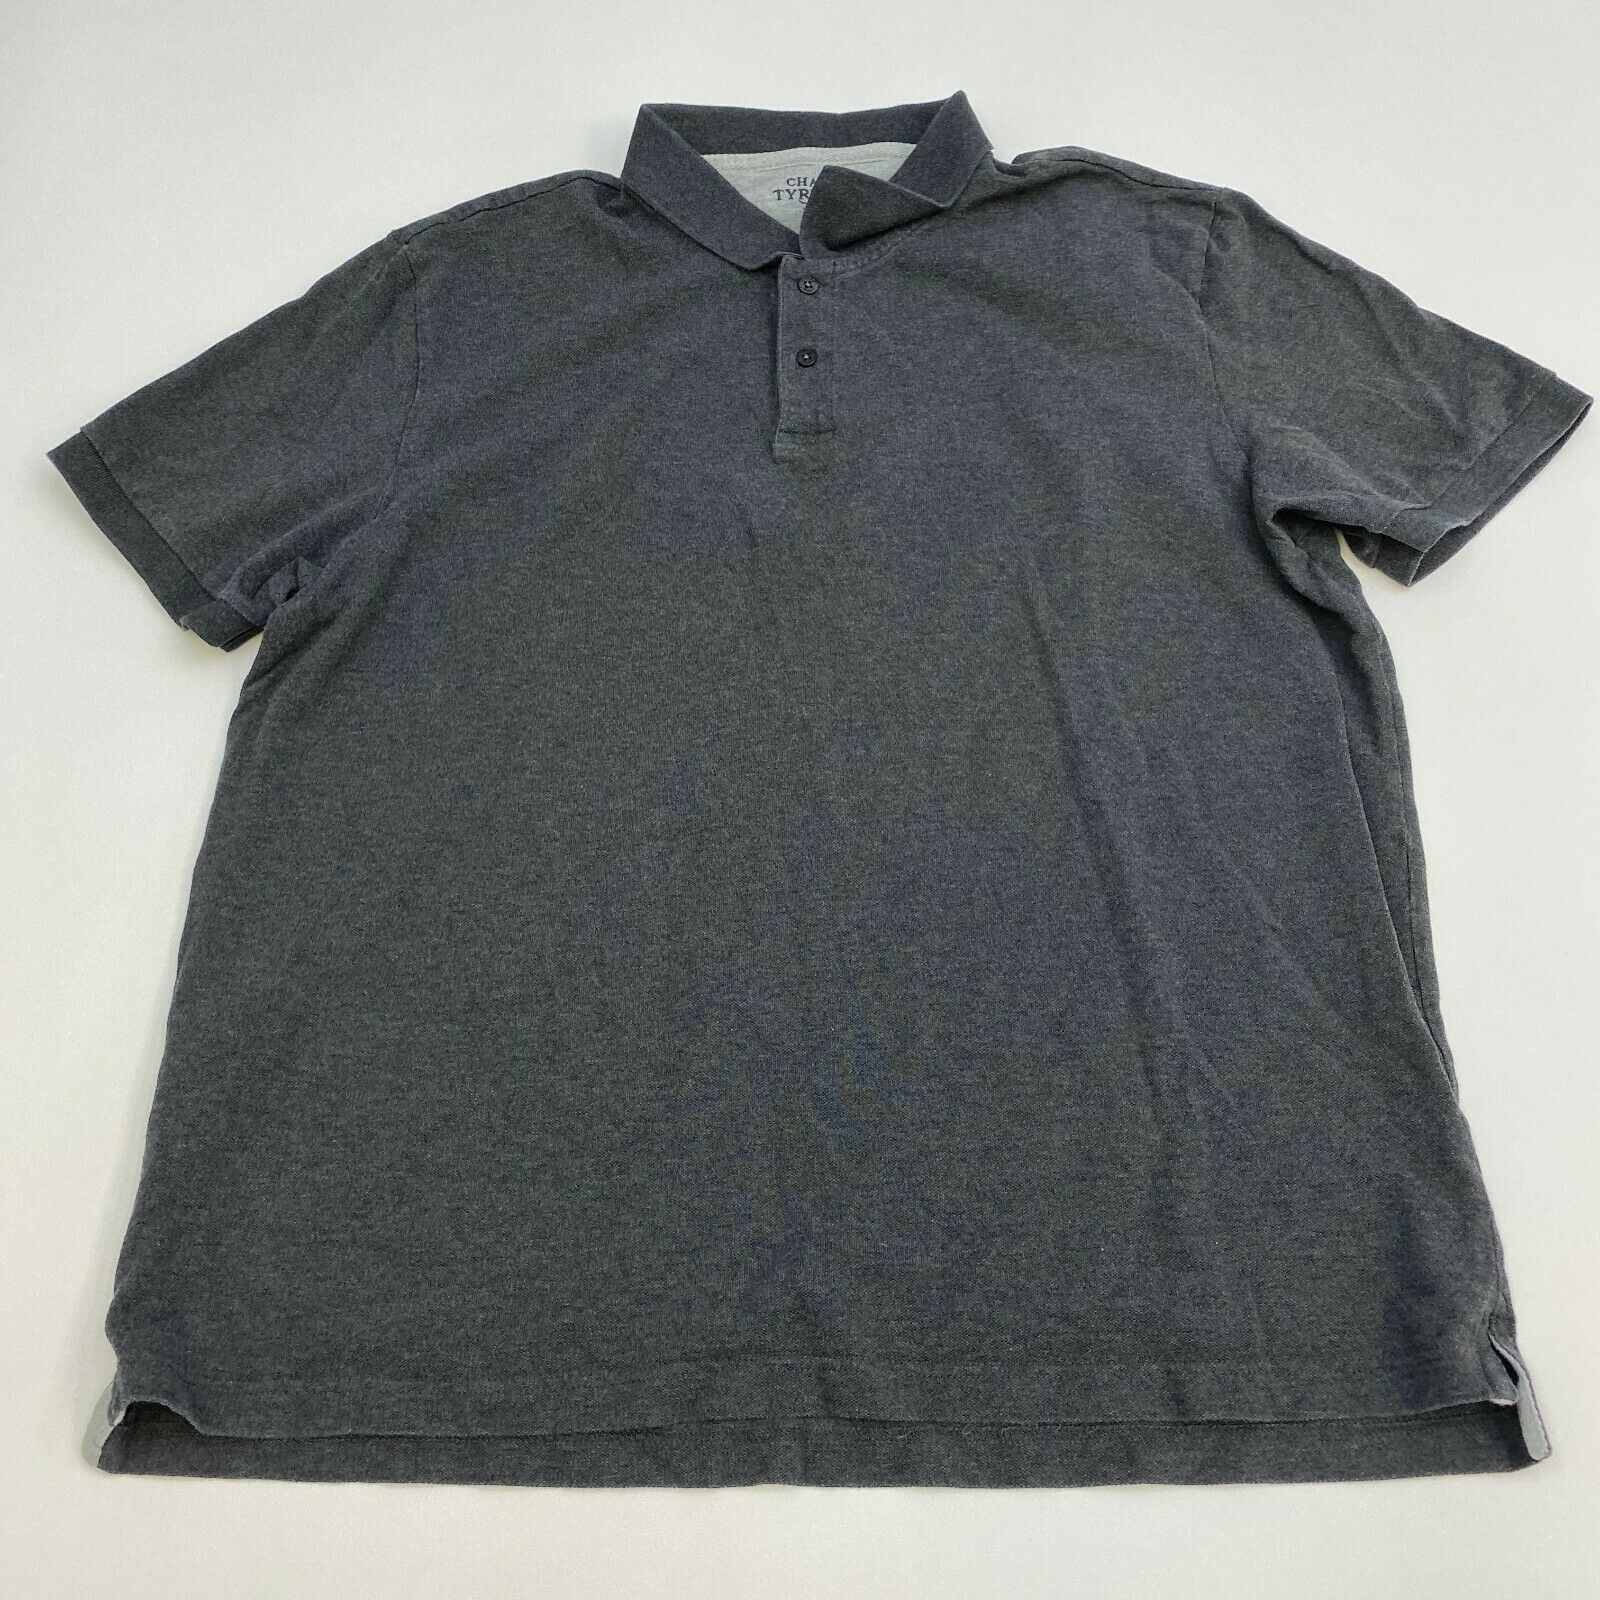 Charles Tyrwhitt Polo Shirt Mens XXL Gray Short Sleeve Casual - Polos